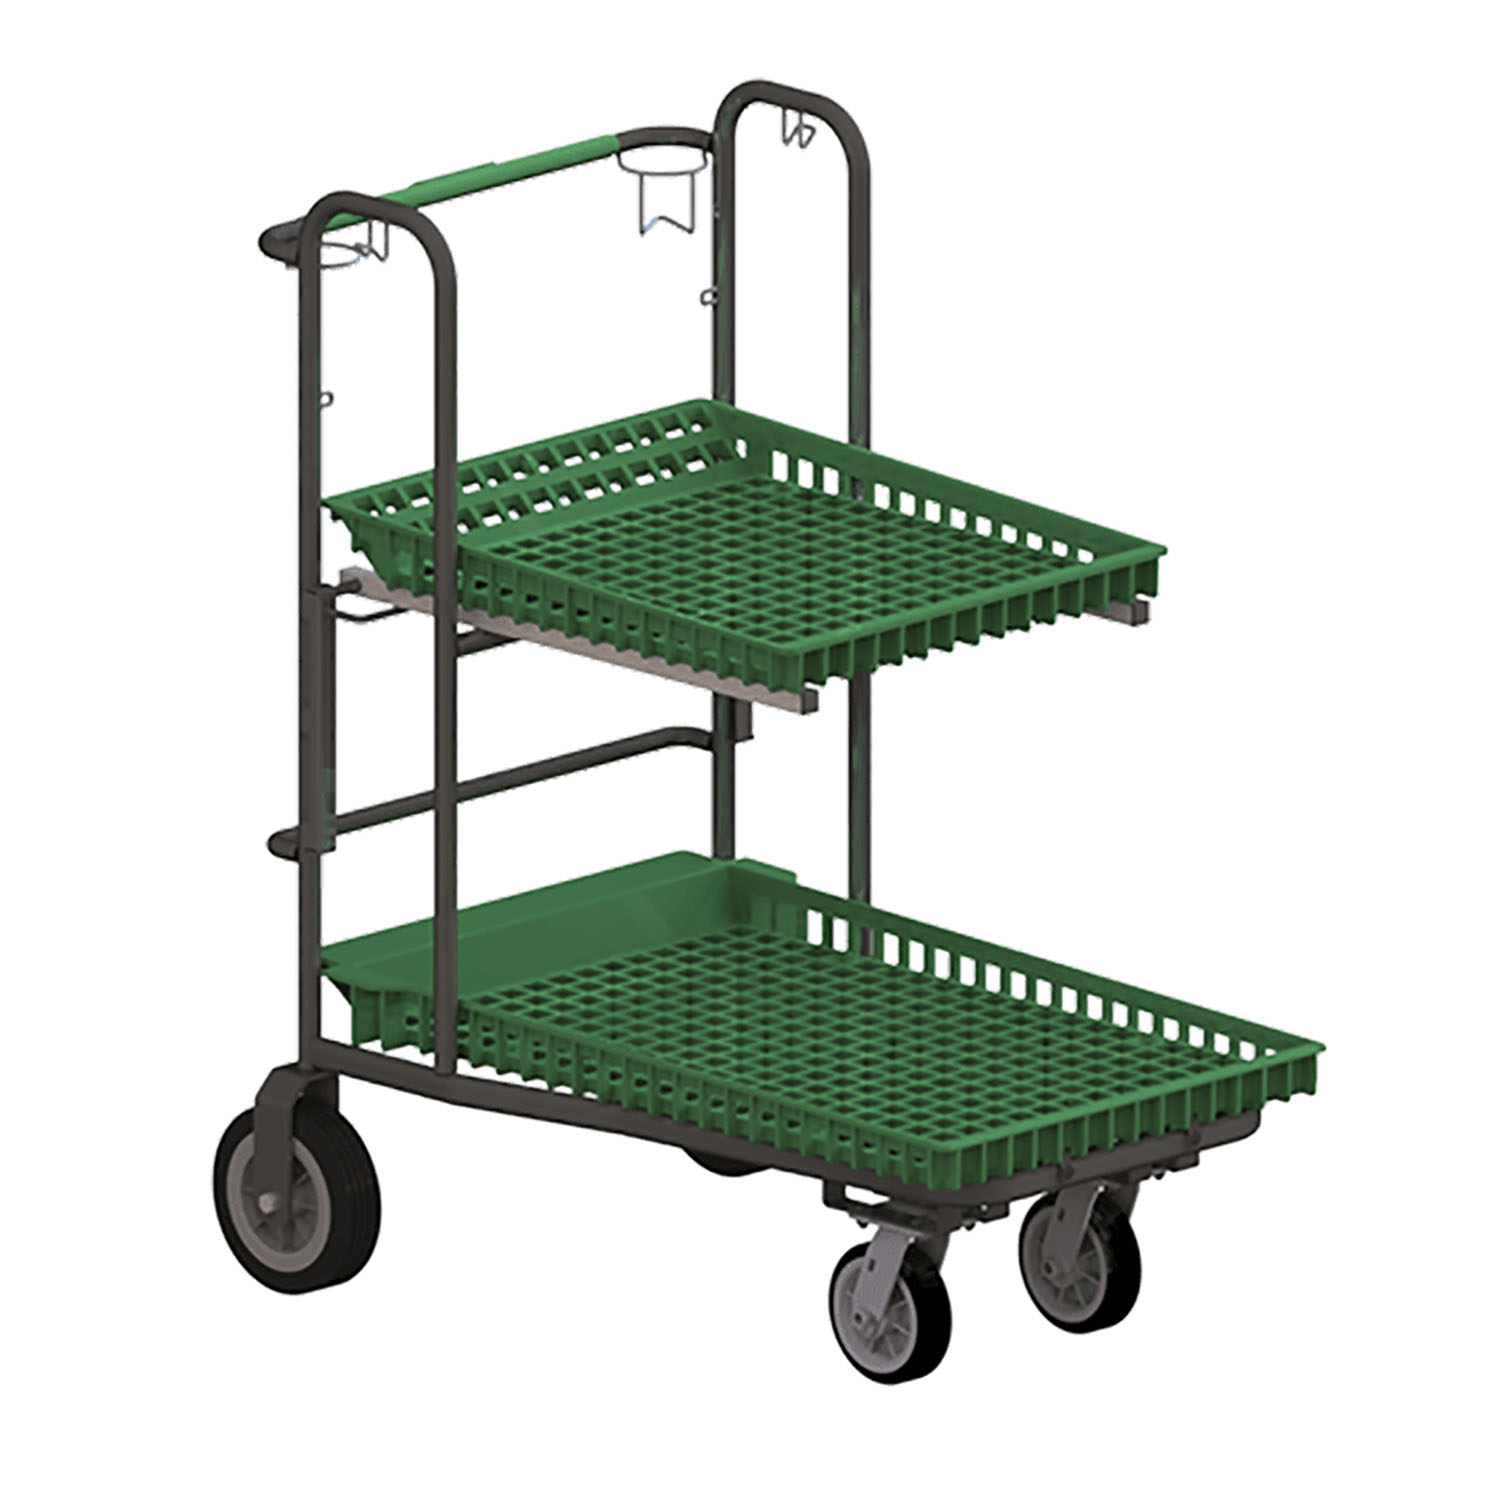 8000806 Plastic Deck Garden Carts industrial cart material handling distribution cart